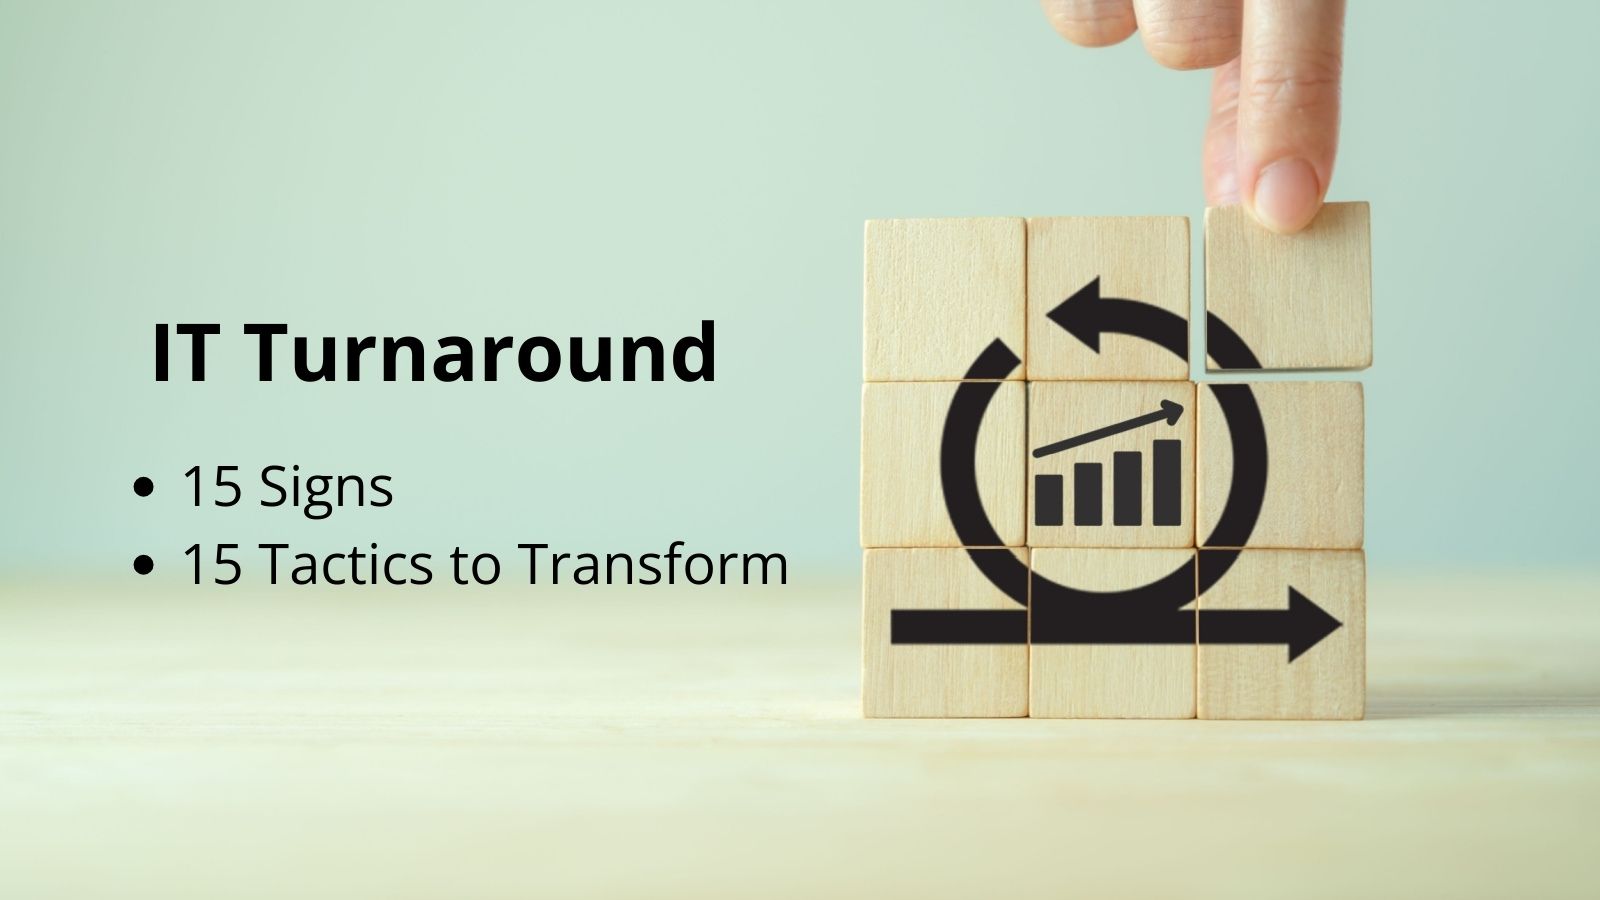 IT Turnaround: 15 Signs, 15 Tactics to Transform